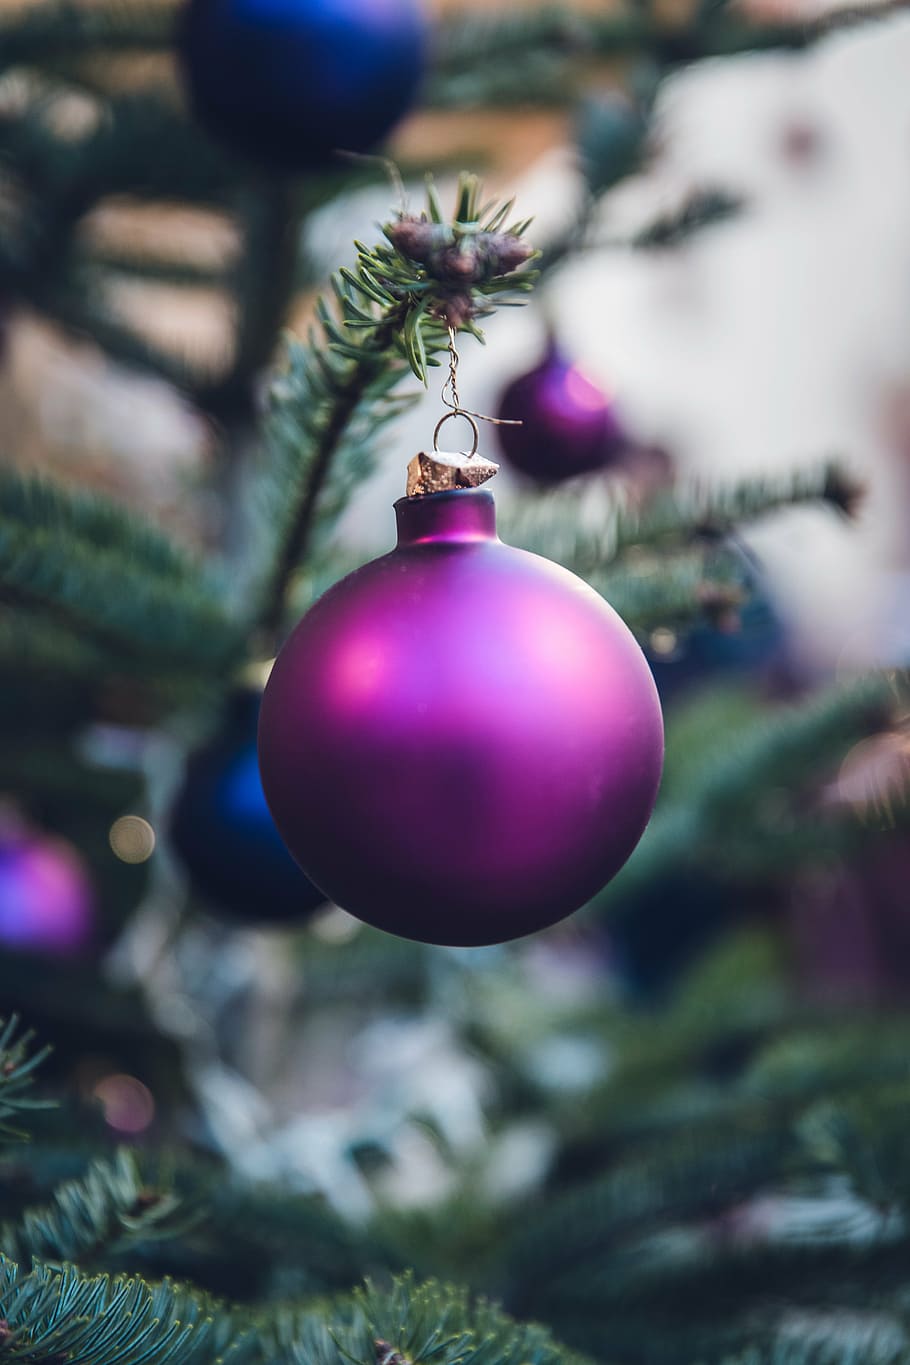 selectivo, fotografía de enfoque, rosa, bola de adorno navideño, bola, feriado, fiesta, celebración, árbol, violeta